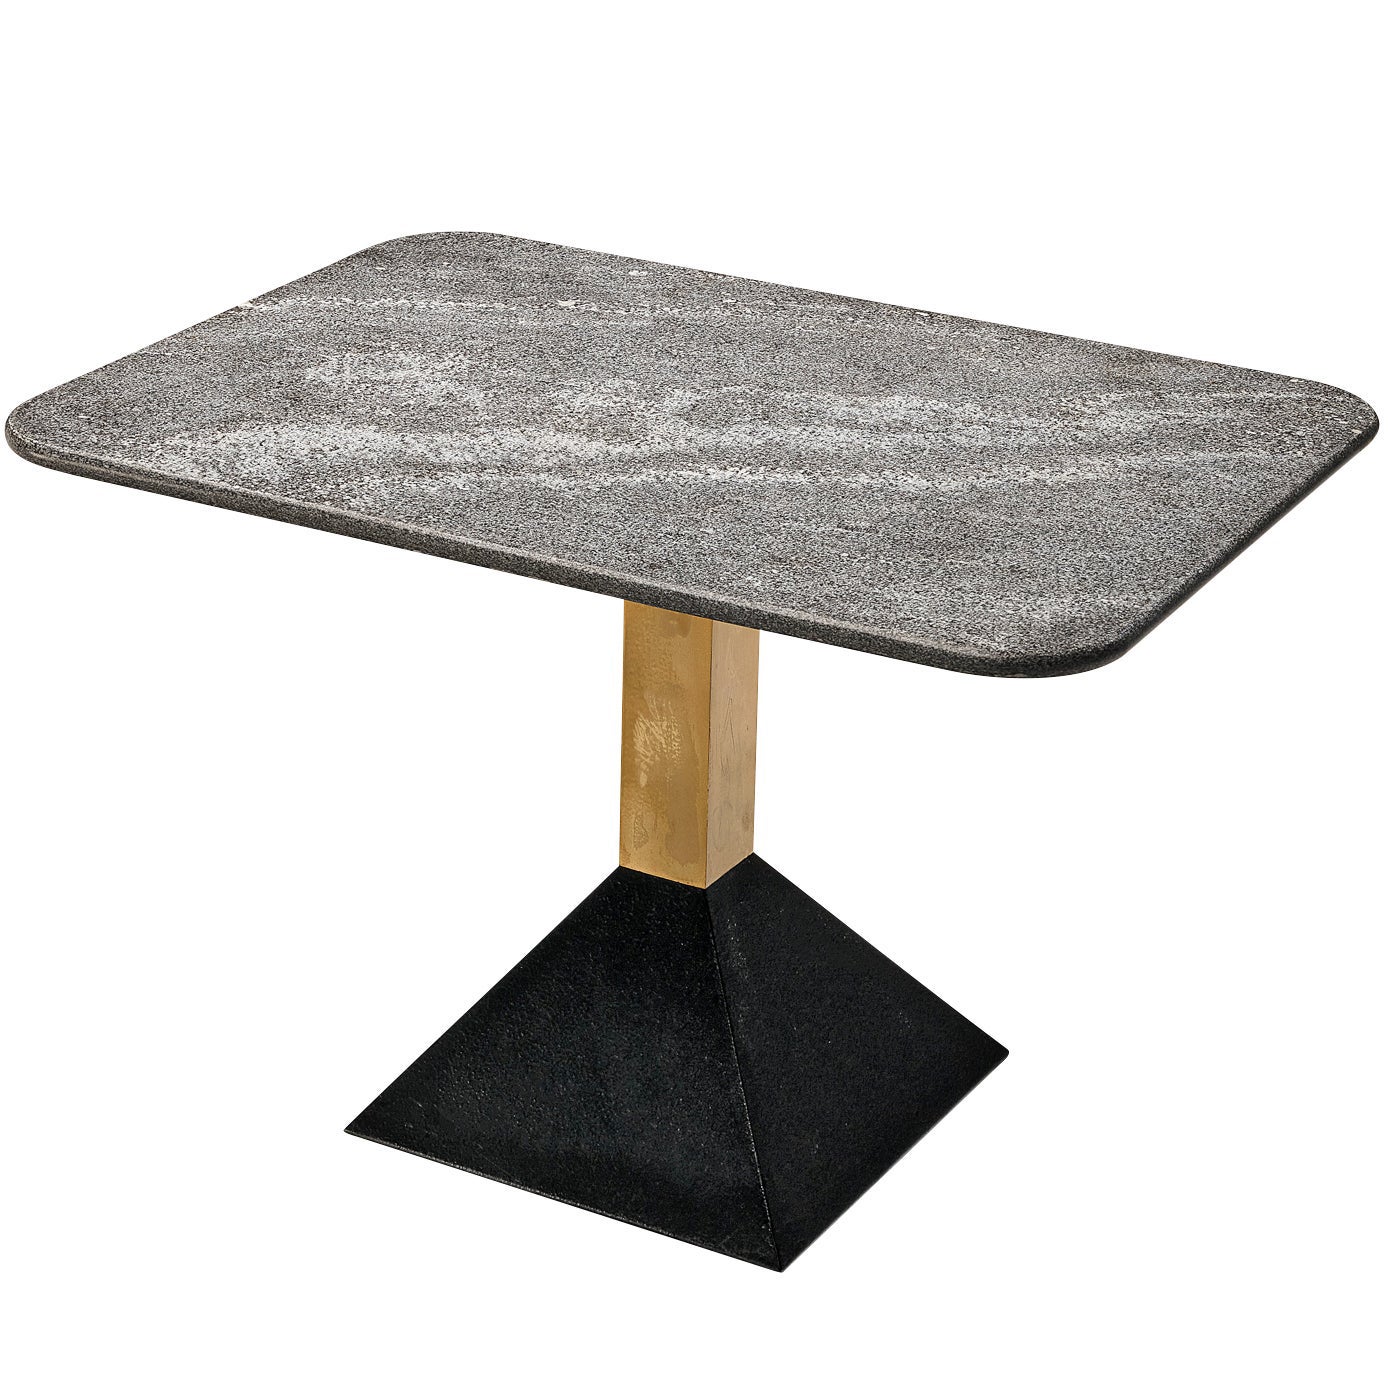 Italian Side Table in Metal and Rectangular Granite Top For Sale